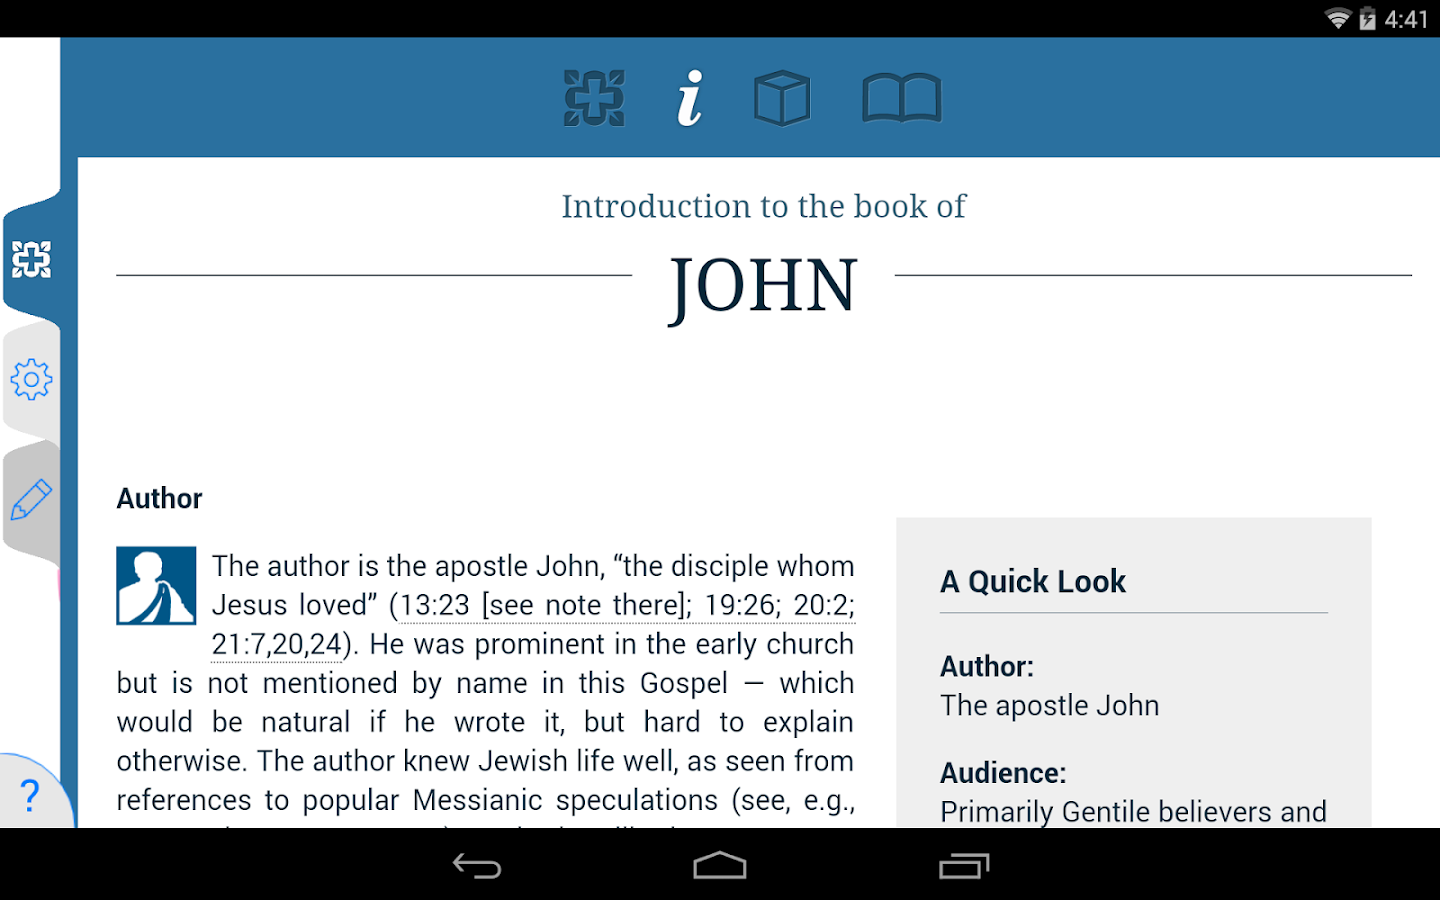 NIV Study Bible 7.8 [Full Version] Android APK Free 